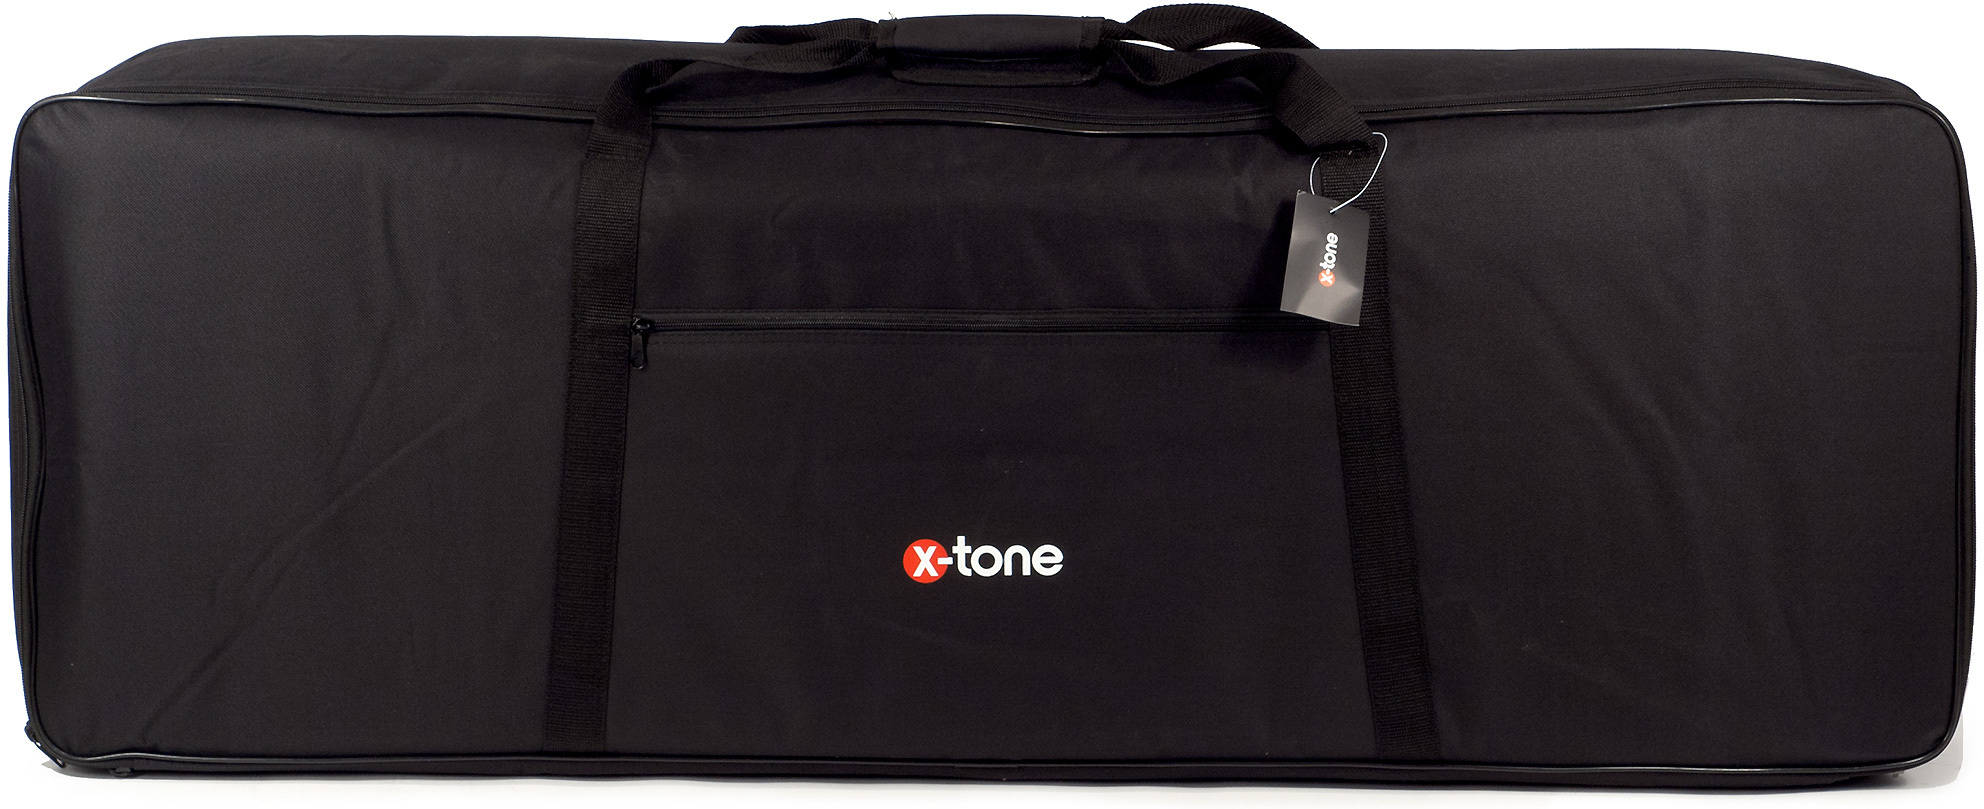 X-tone 2101 Pour Clavier 76 Notes En 10 Mm Black - Tasche für Keyboard - Main picture